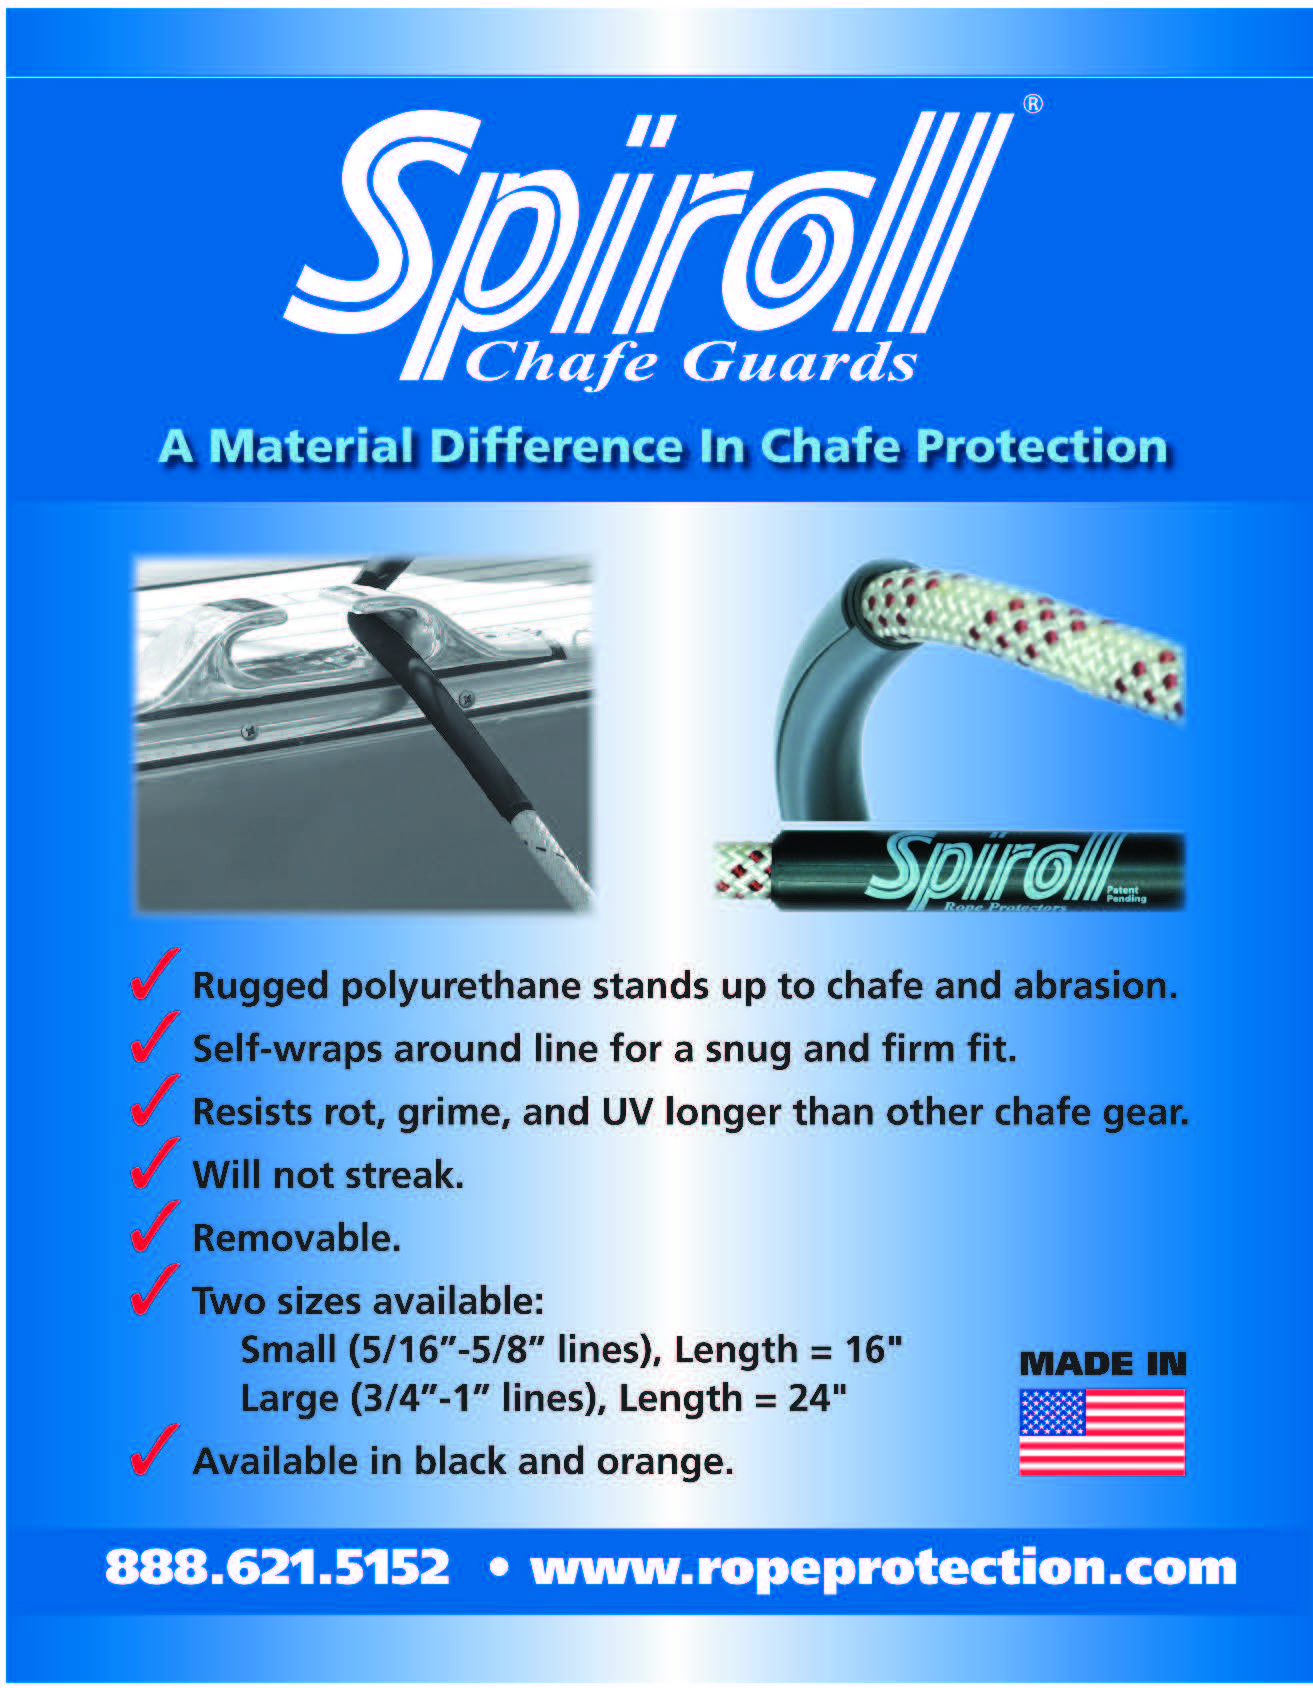 Spiroll Chafe Guard flyerfront_Page_1